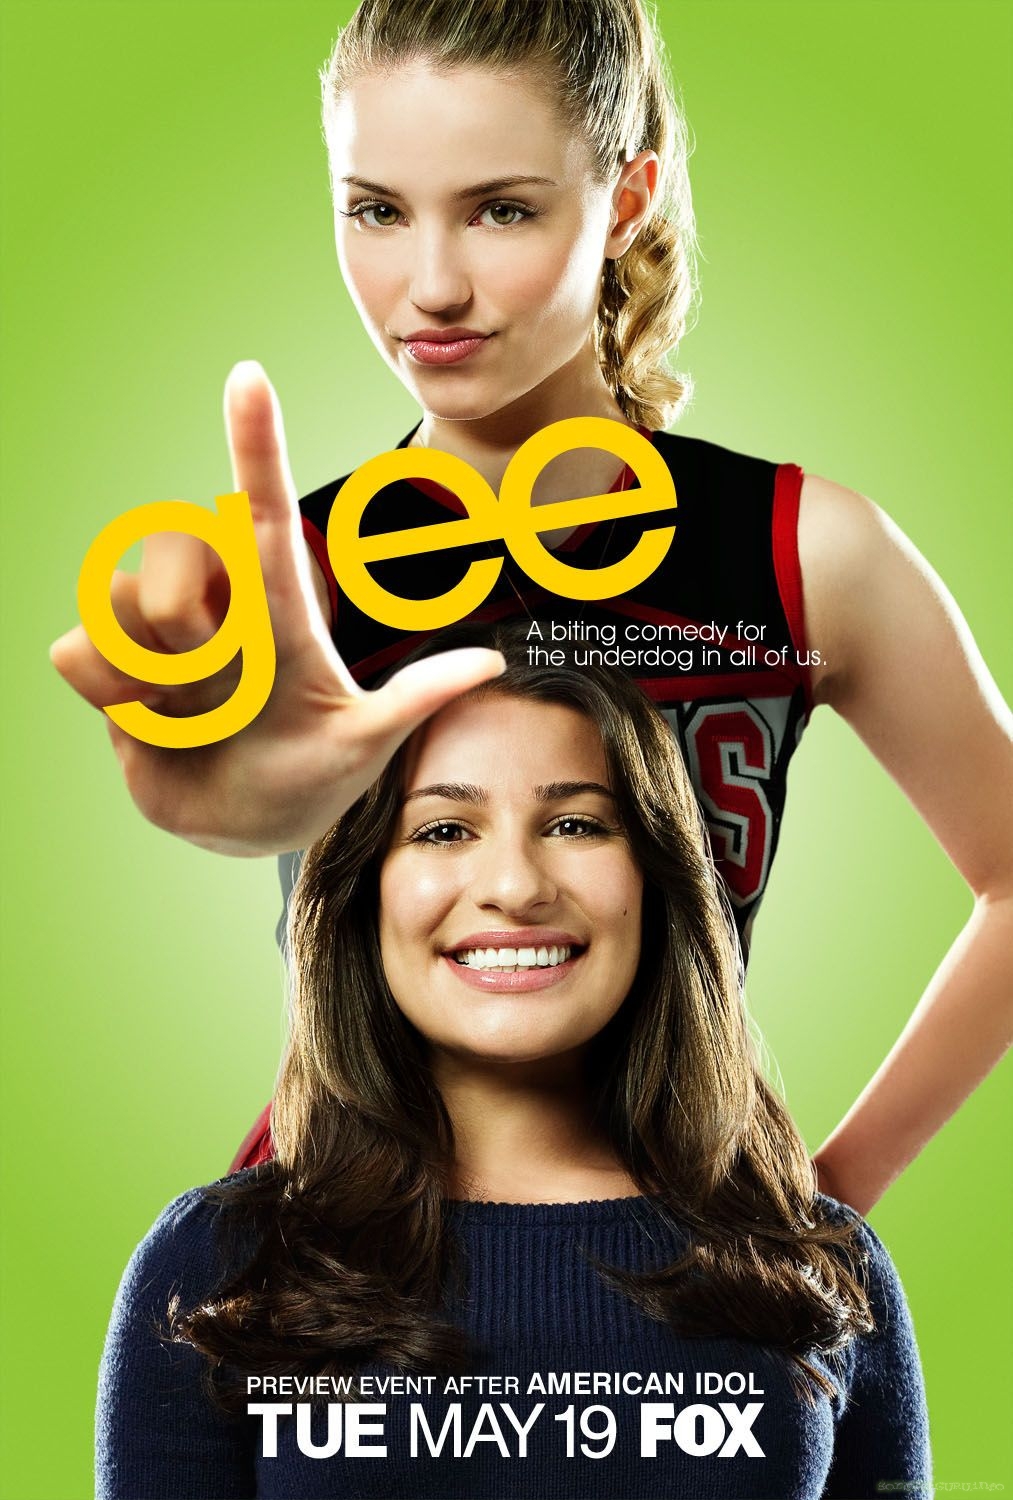 Glee+-+parade-poster_013.jpg